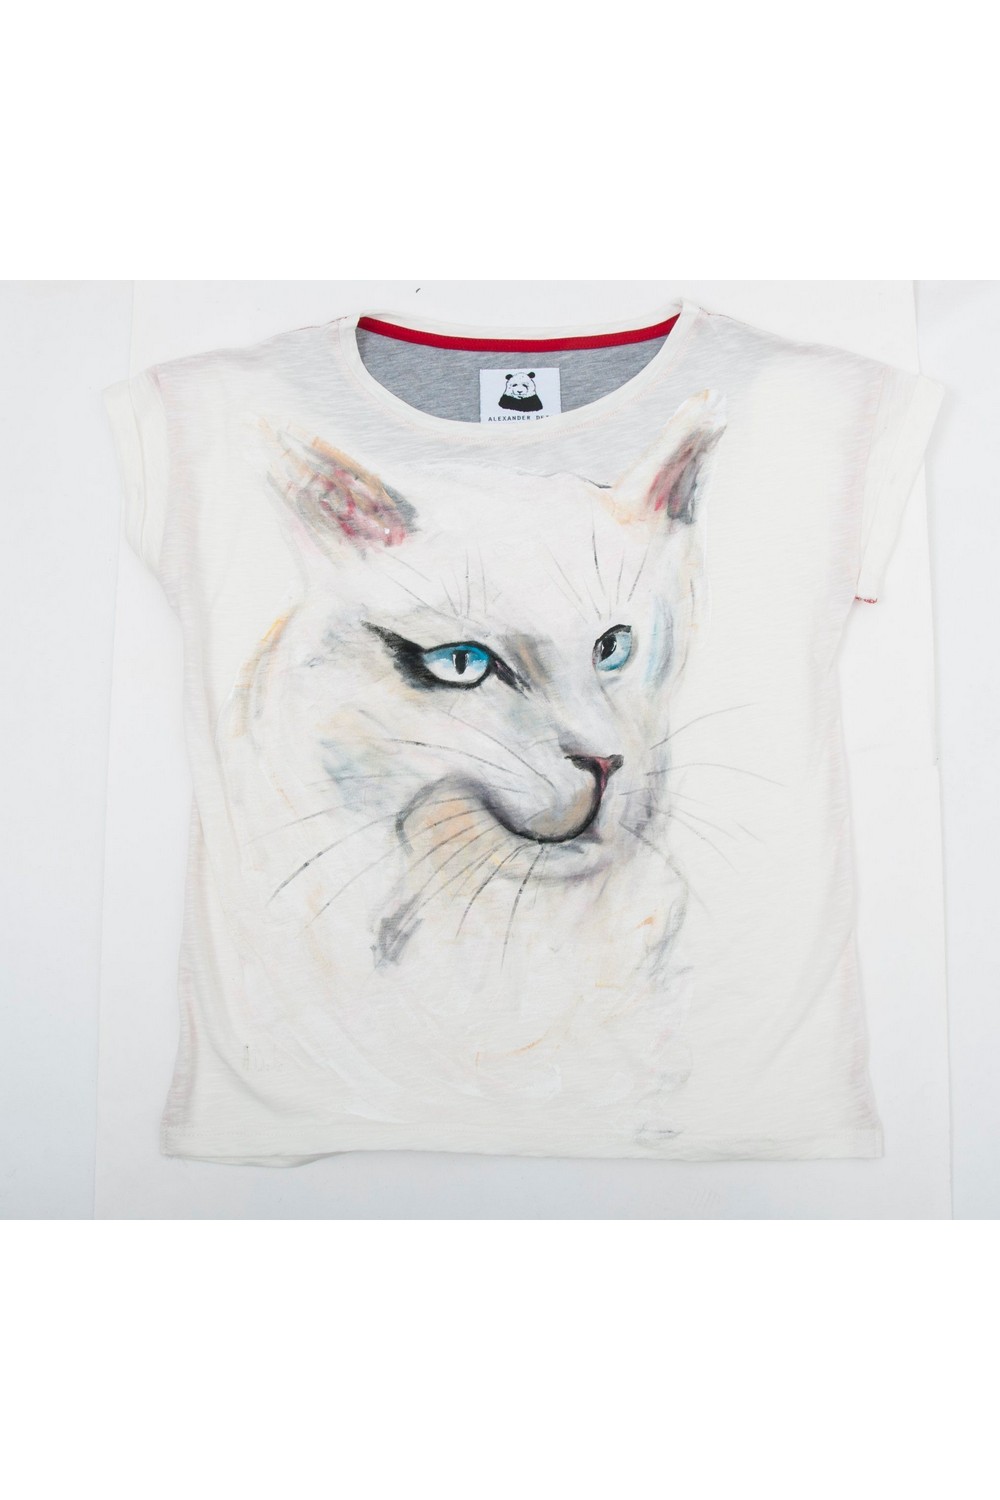 Buy Sport white women`s cotton print sleeveless tee shirt , Cat tshirt, Unique stylish t shirt